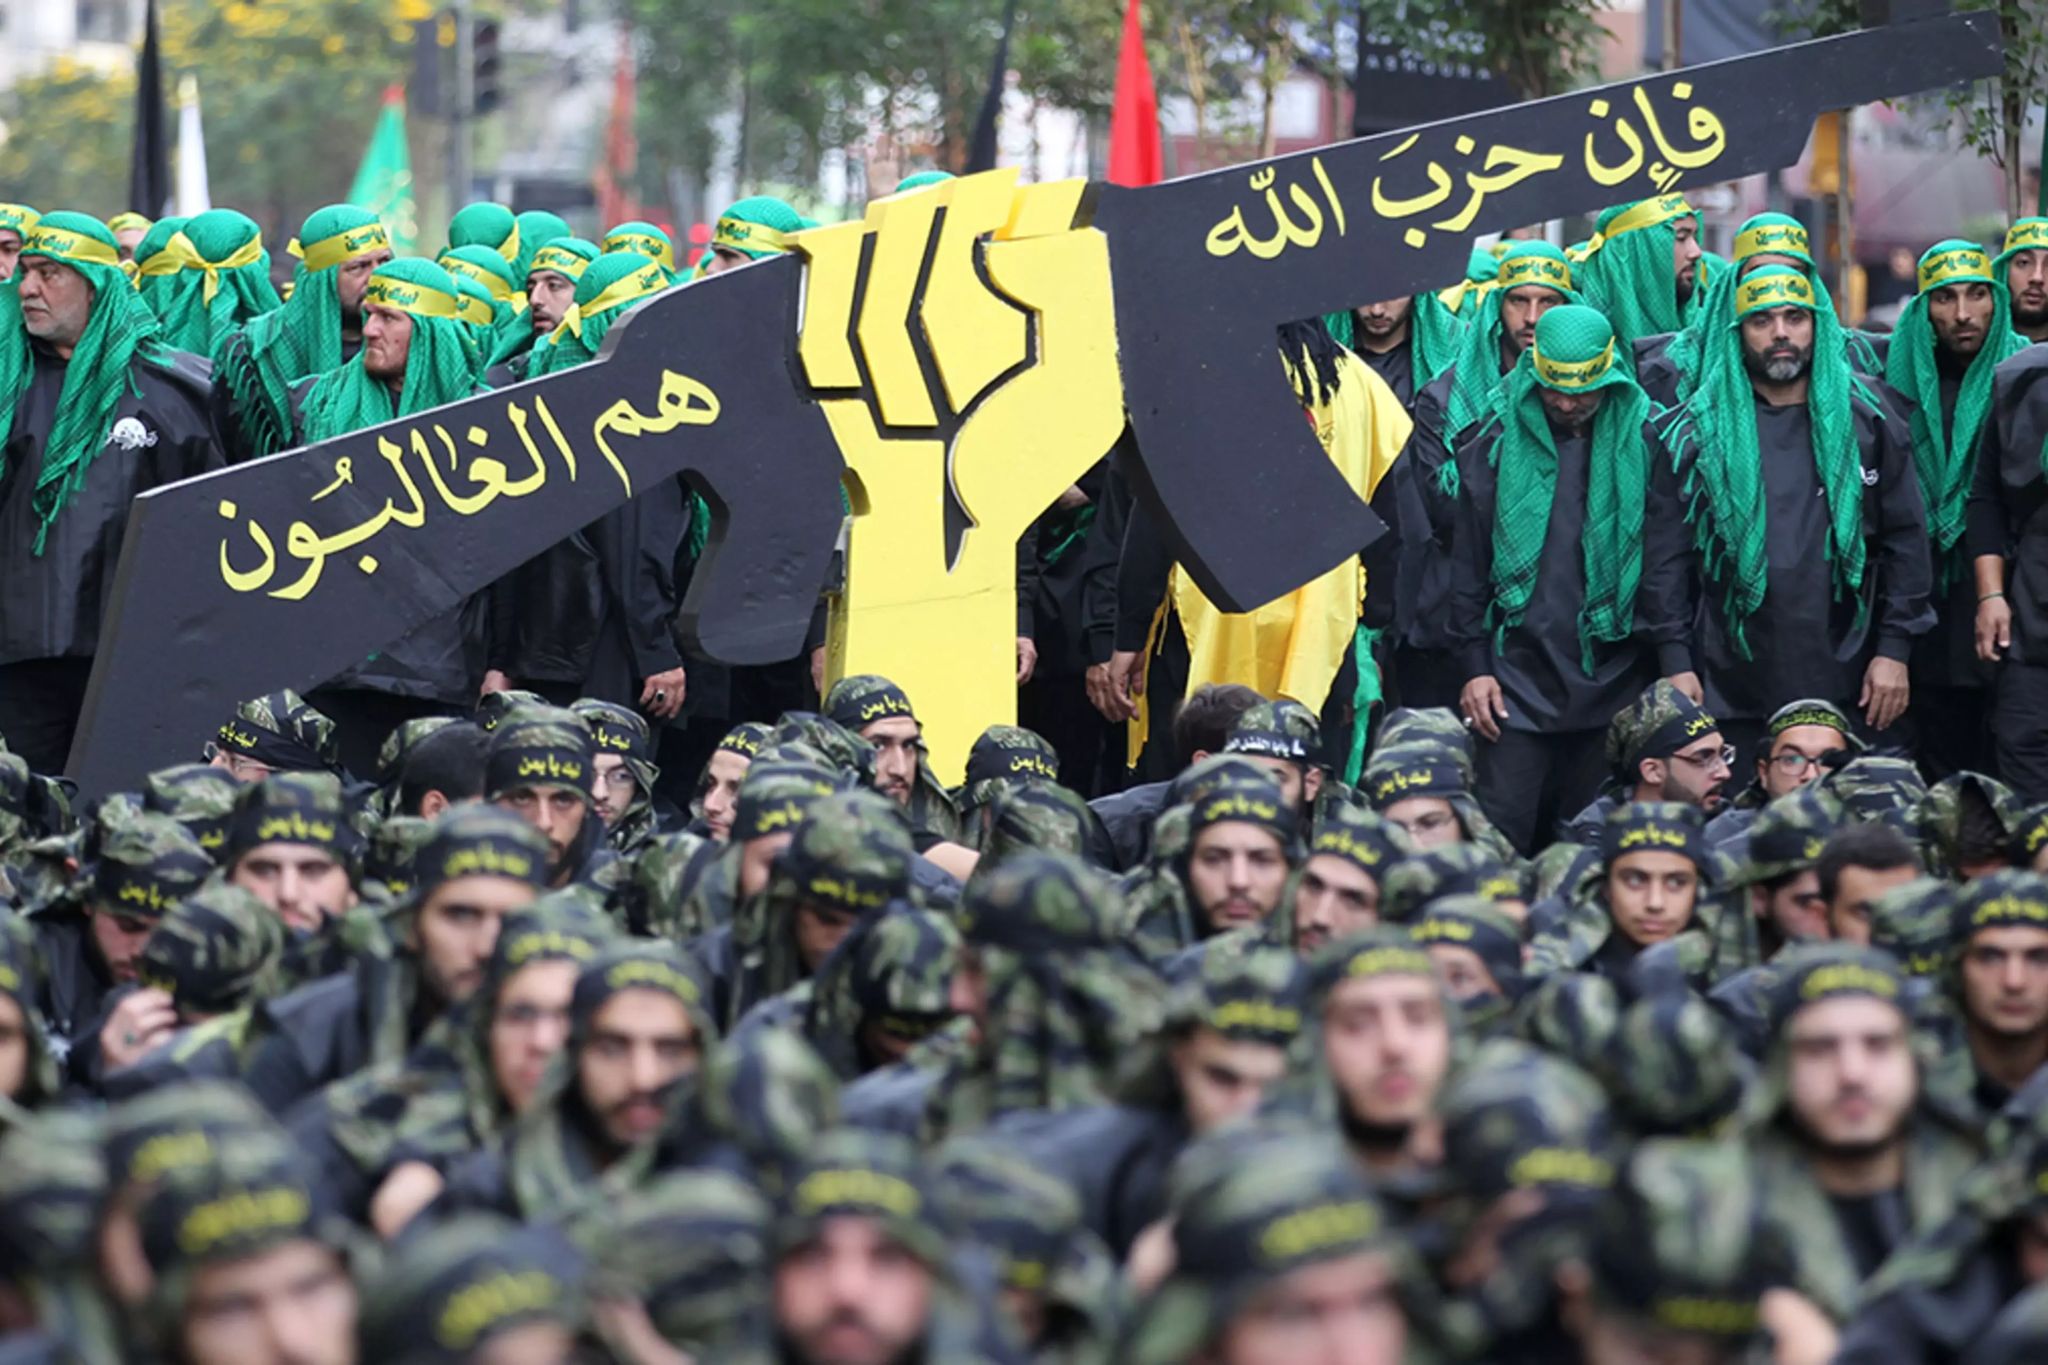 Hezbollah: “Gaza vincerà!”